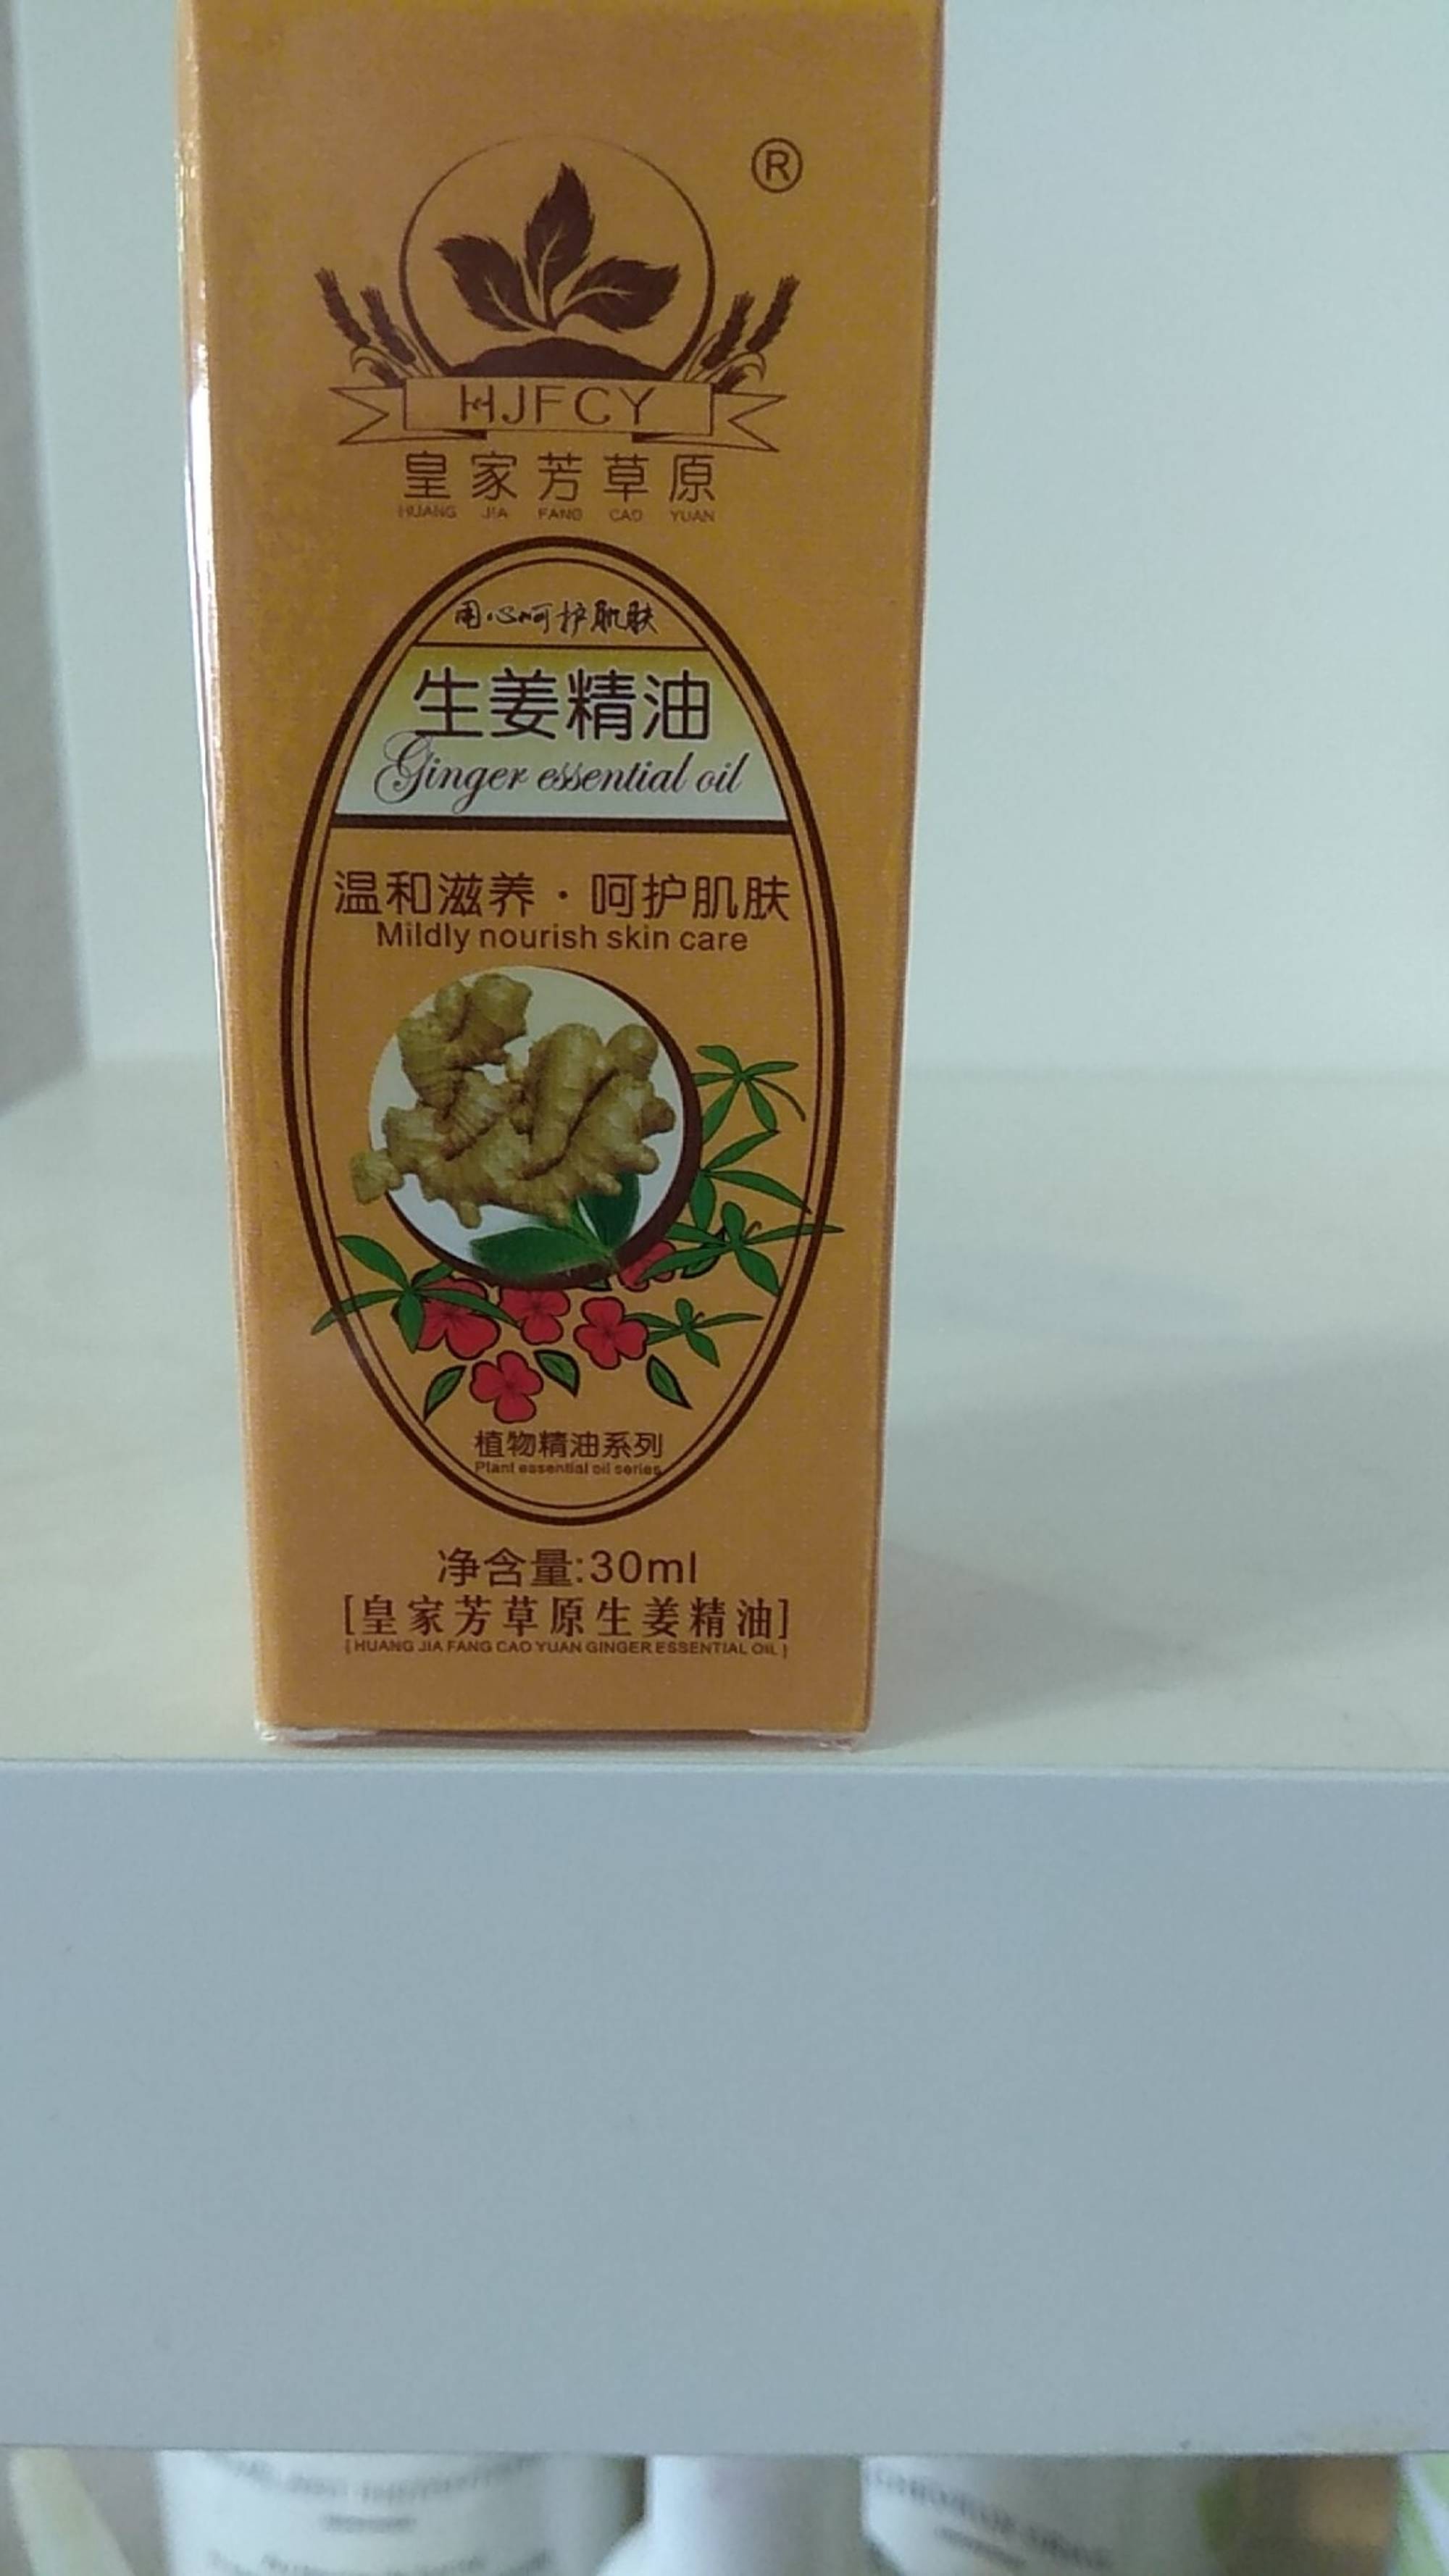 HUANG JIA FANG CAO YUAN - Ginger oil - Gentle nourish care for the skin